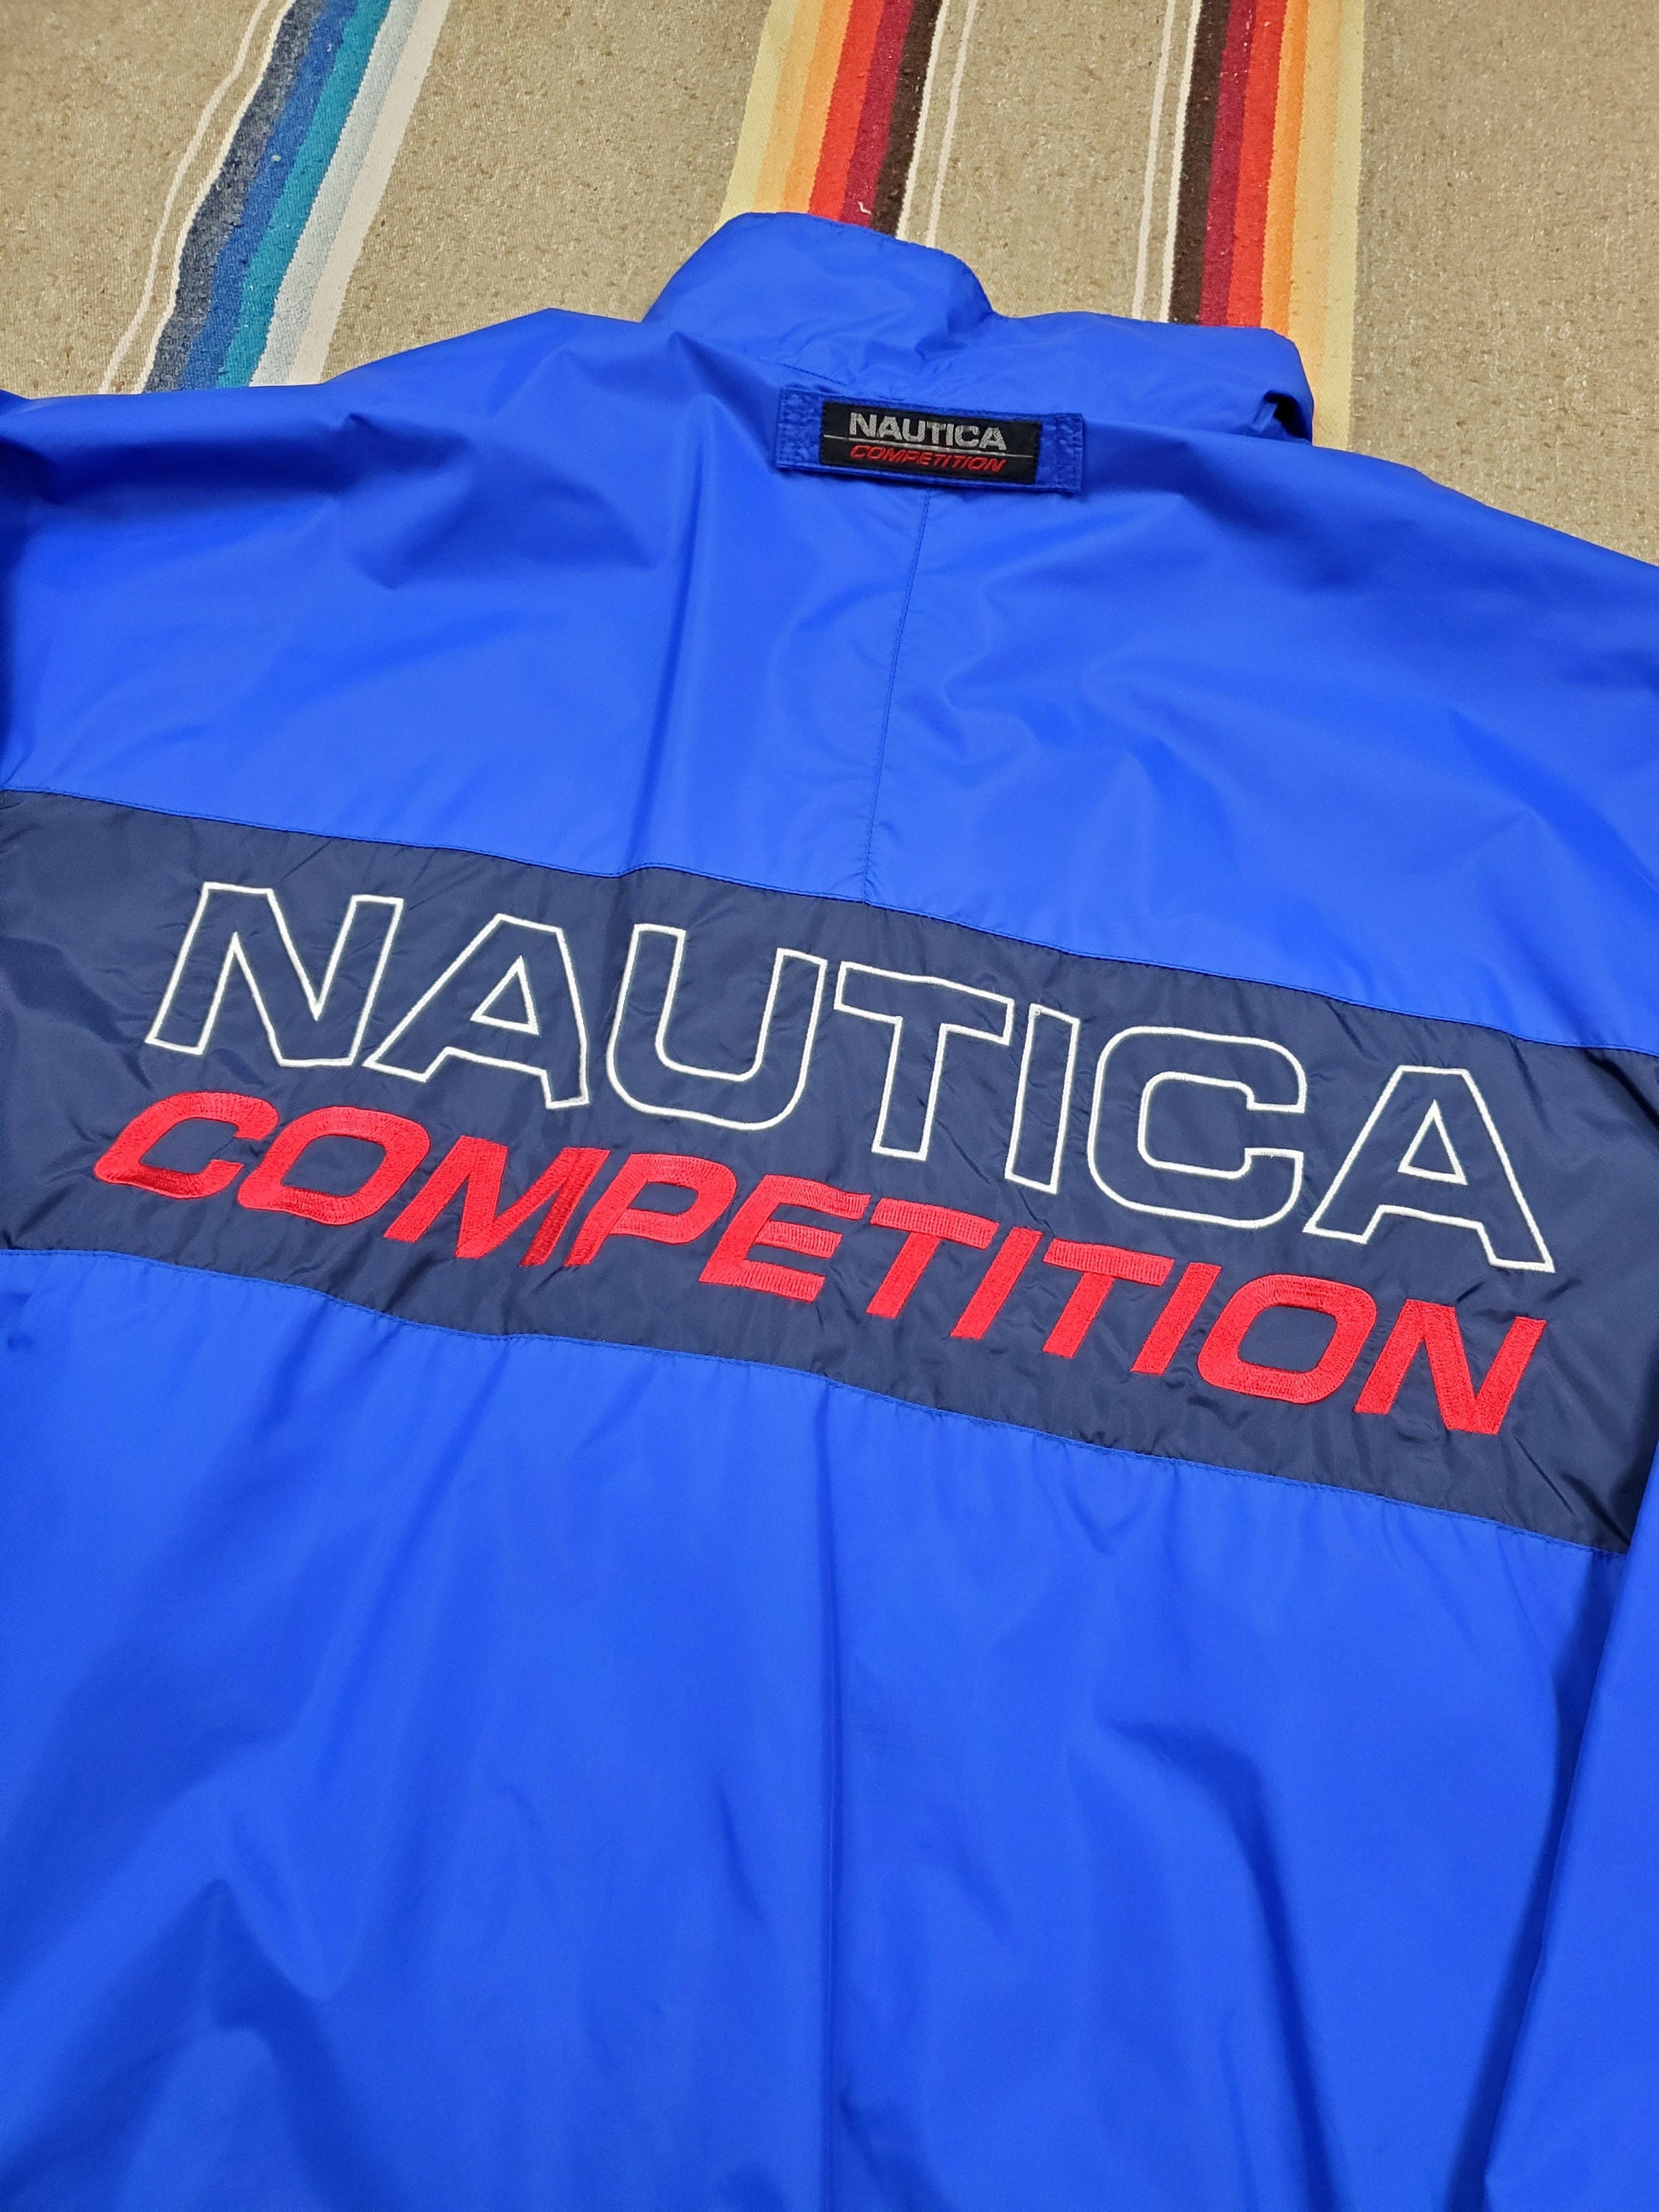 1990s Nautica Competition Windbreaker Sailing Jacket Size XL